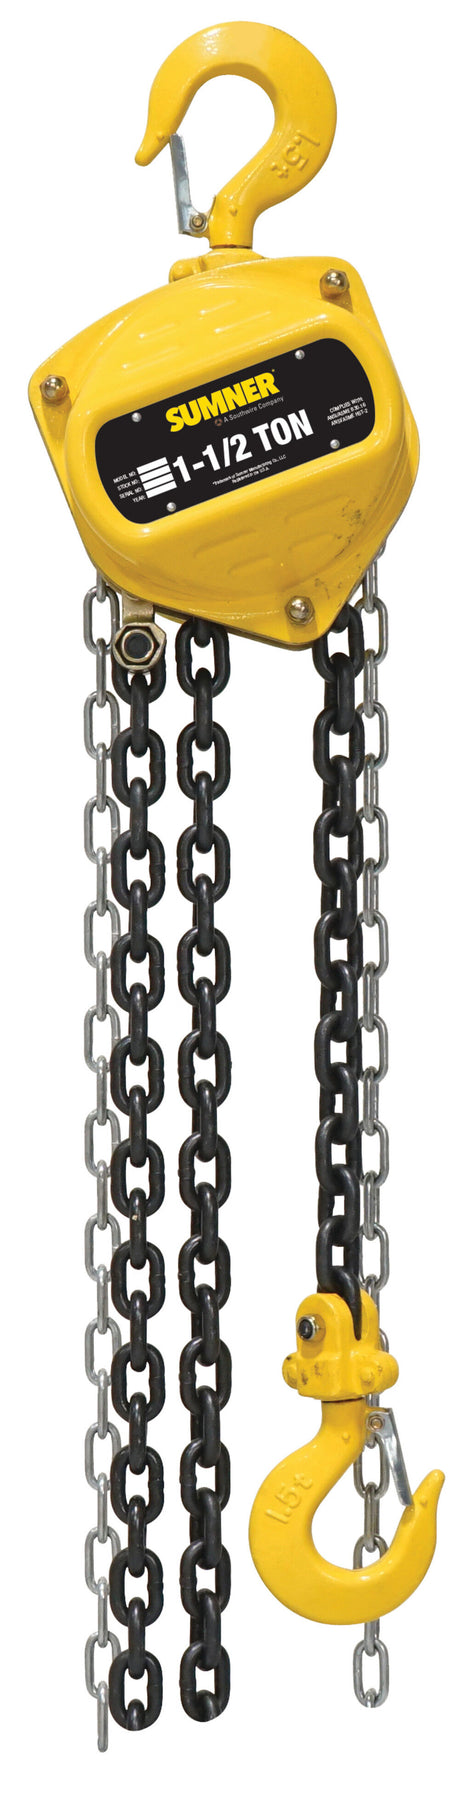 1-1/2 Ton Chain Hoist with 15 ft. Chain Fall 787567